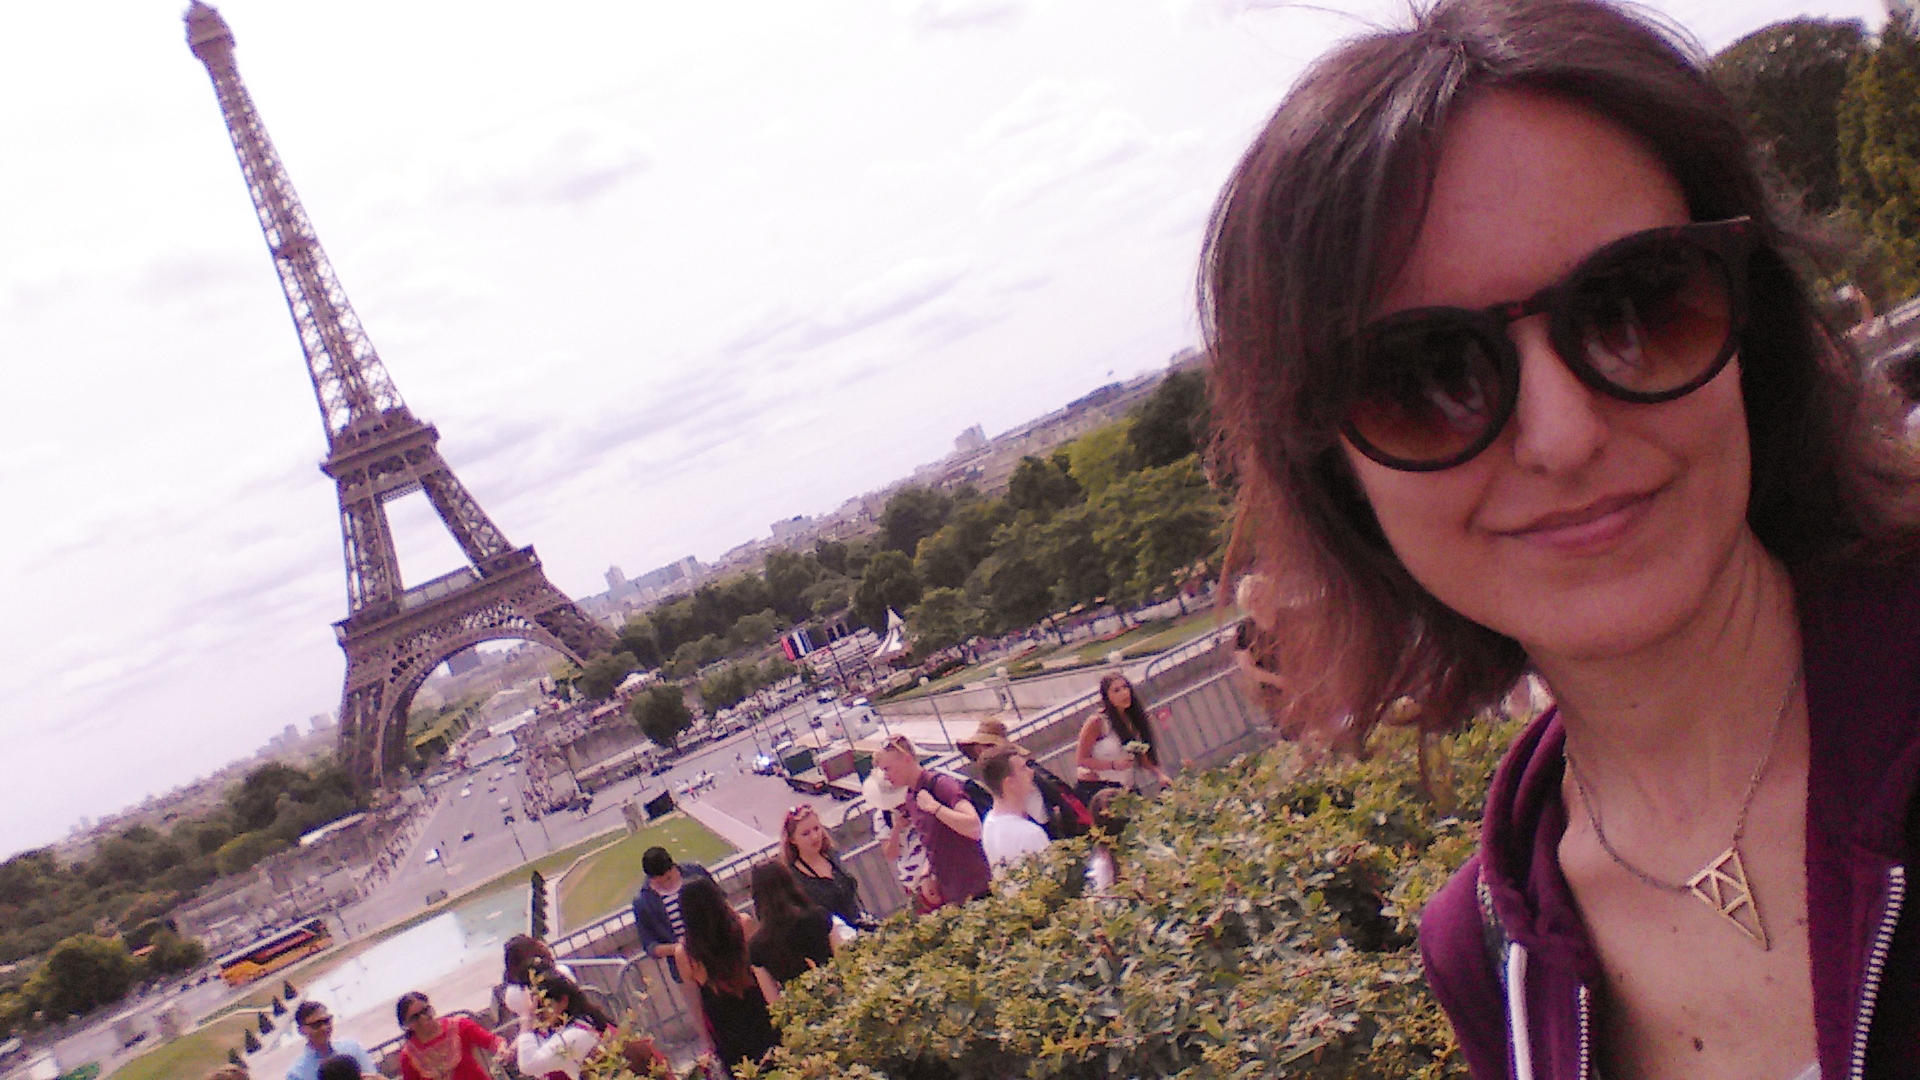 and out comes the girl Tour Eiffel Parigi